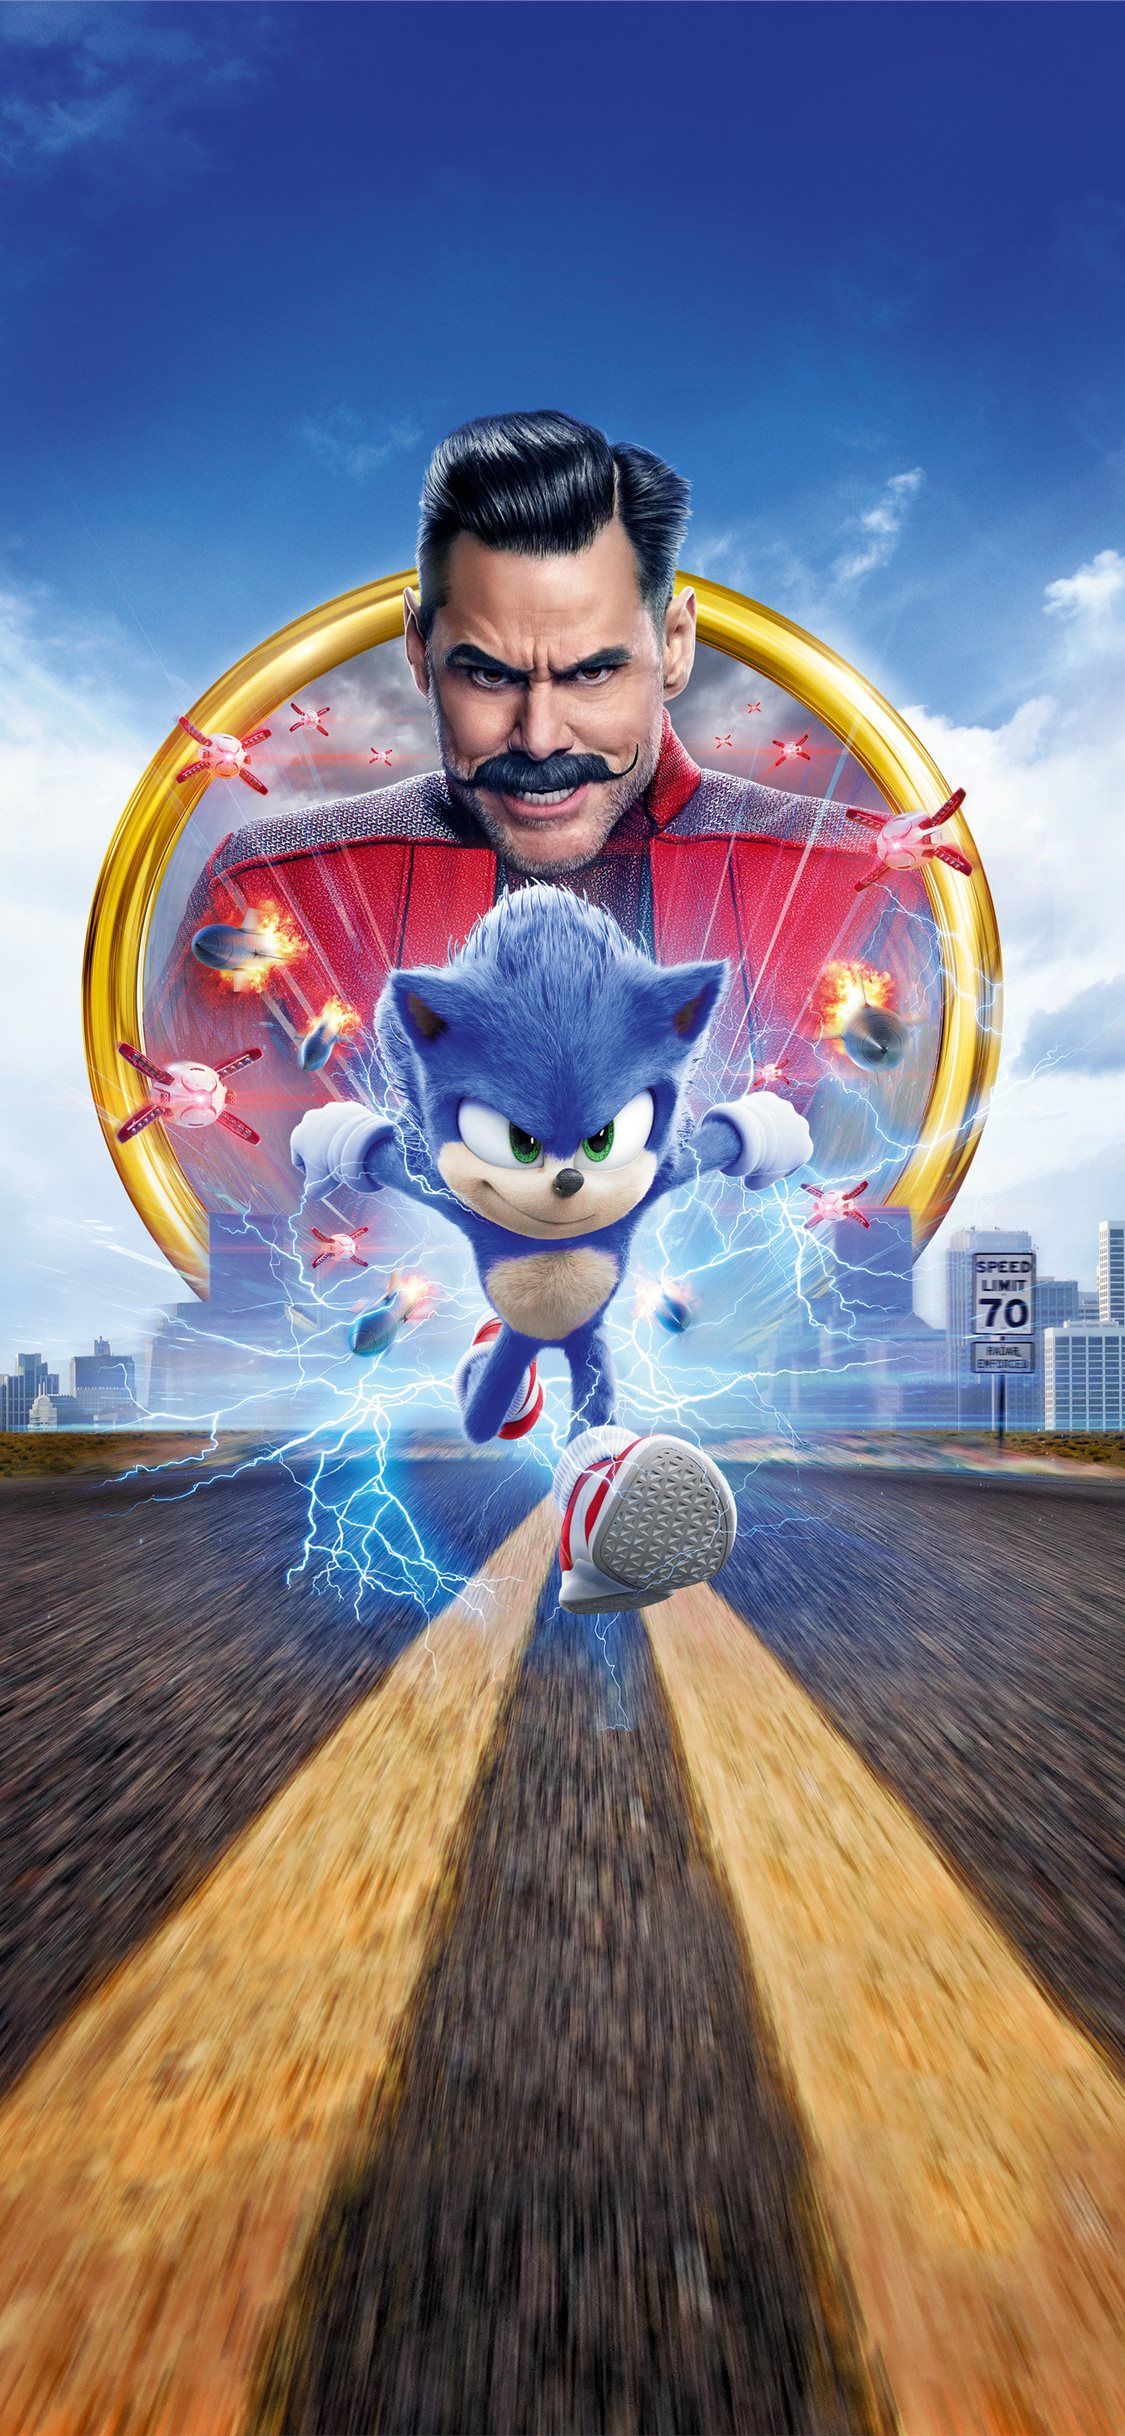 sonic the hedgehog 2020 15k #SonicTheHedgehog #movies Movies k k k k #iPhoneXWallpaper. Hedgehog movie, Sonic the hedgehog, Sonic funny